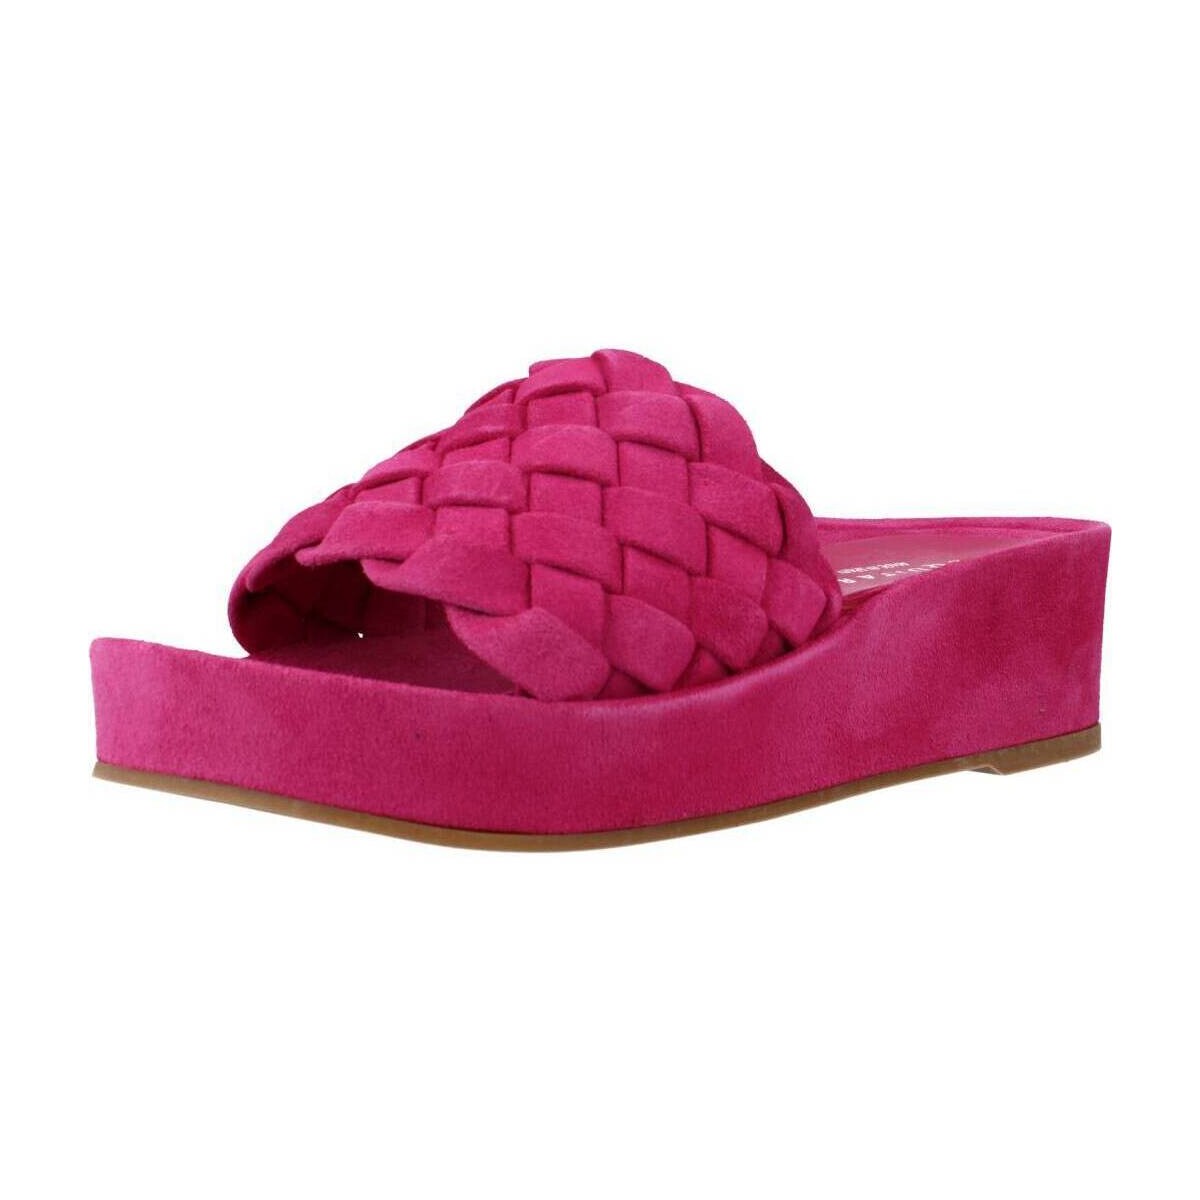 Schoenen Dames Sandalen / Open schoenen Equitare BERNA Roze